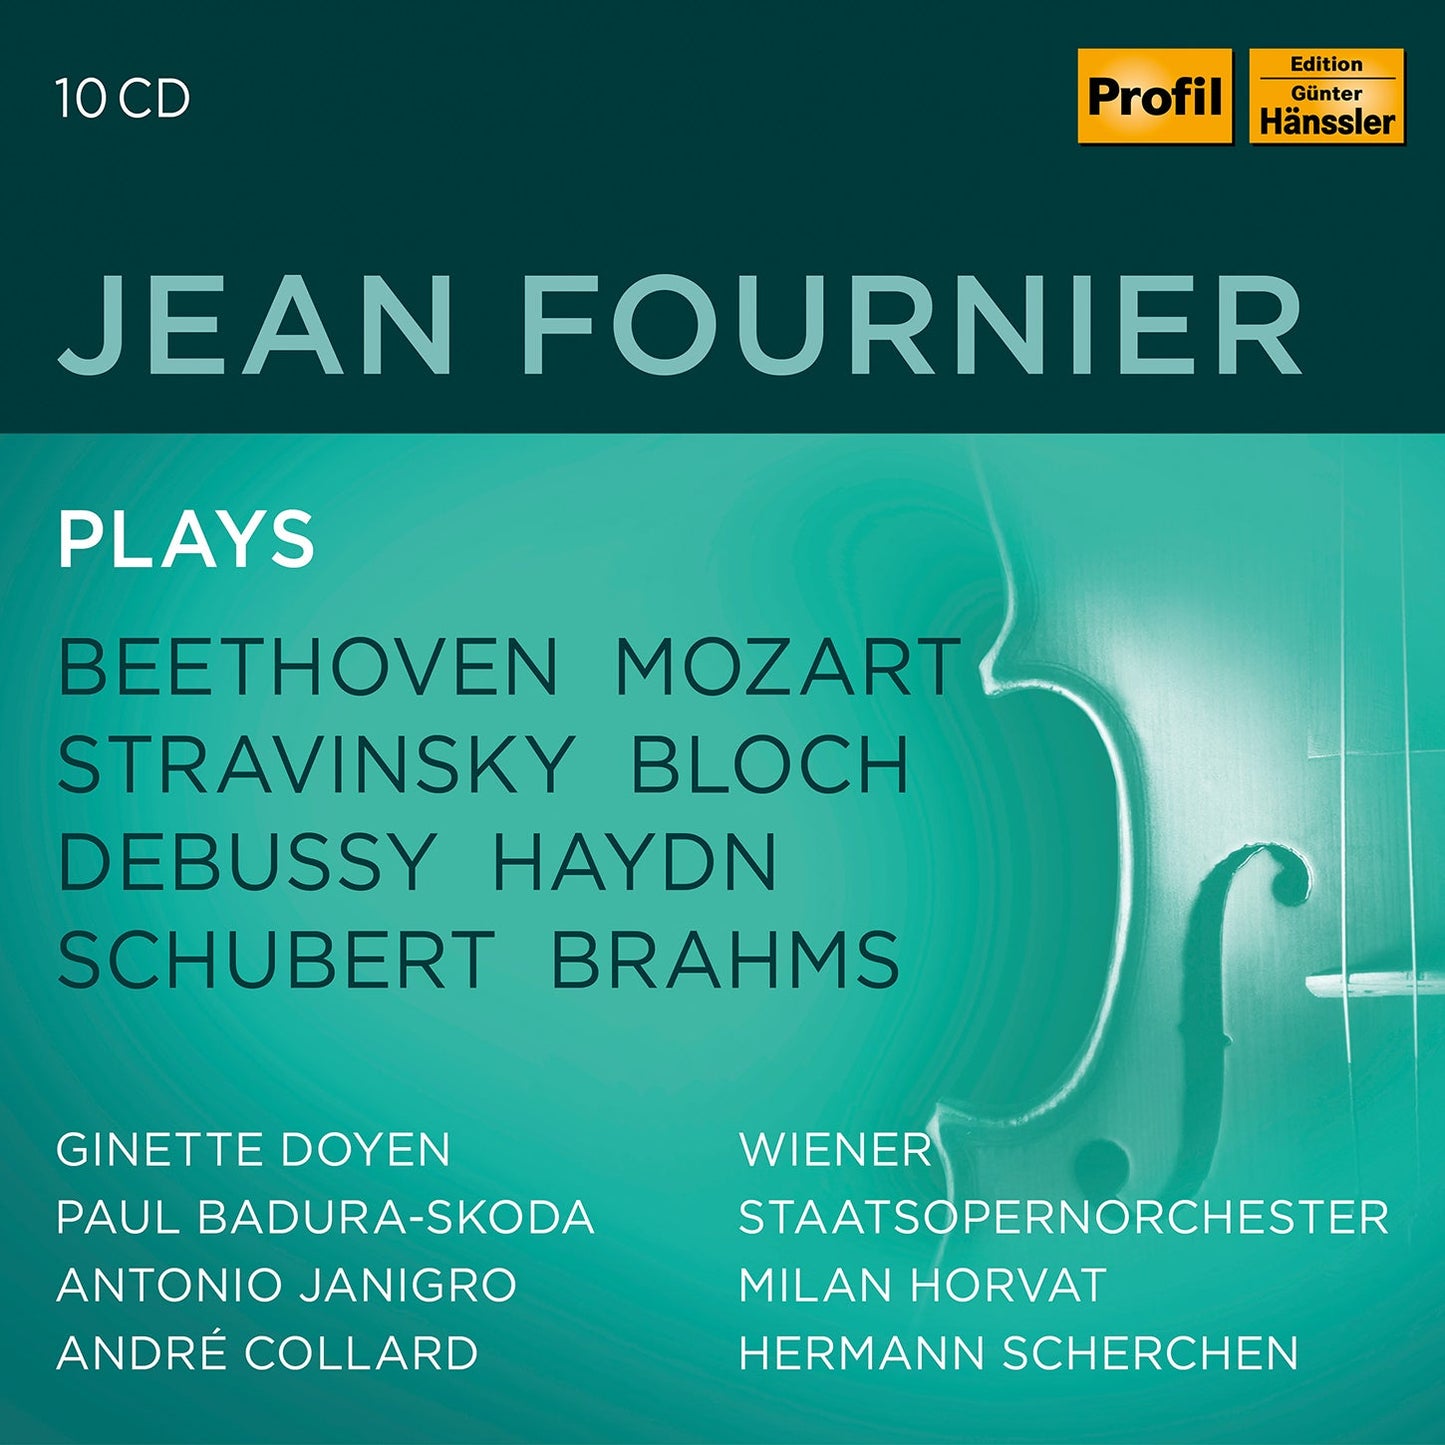 Jean Fournier Plays Beethoven, Mozart, Stravinsky, Bloch, De